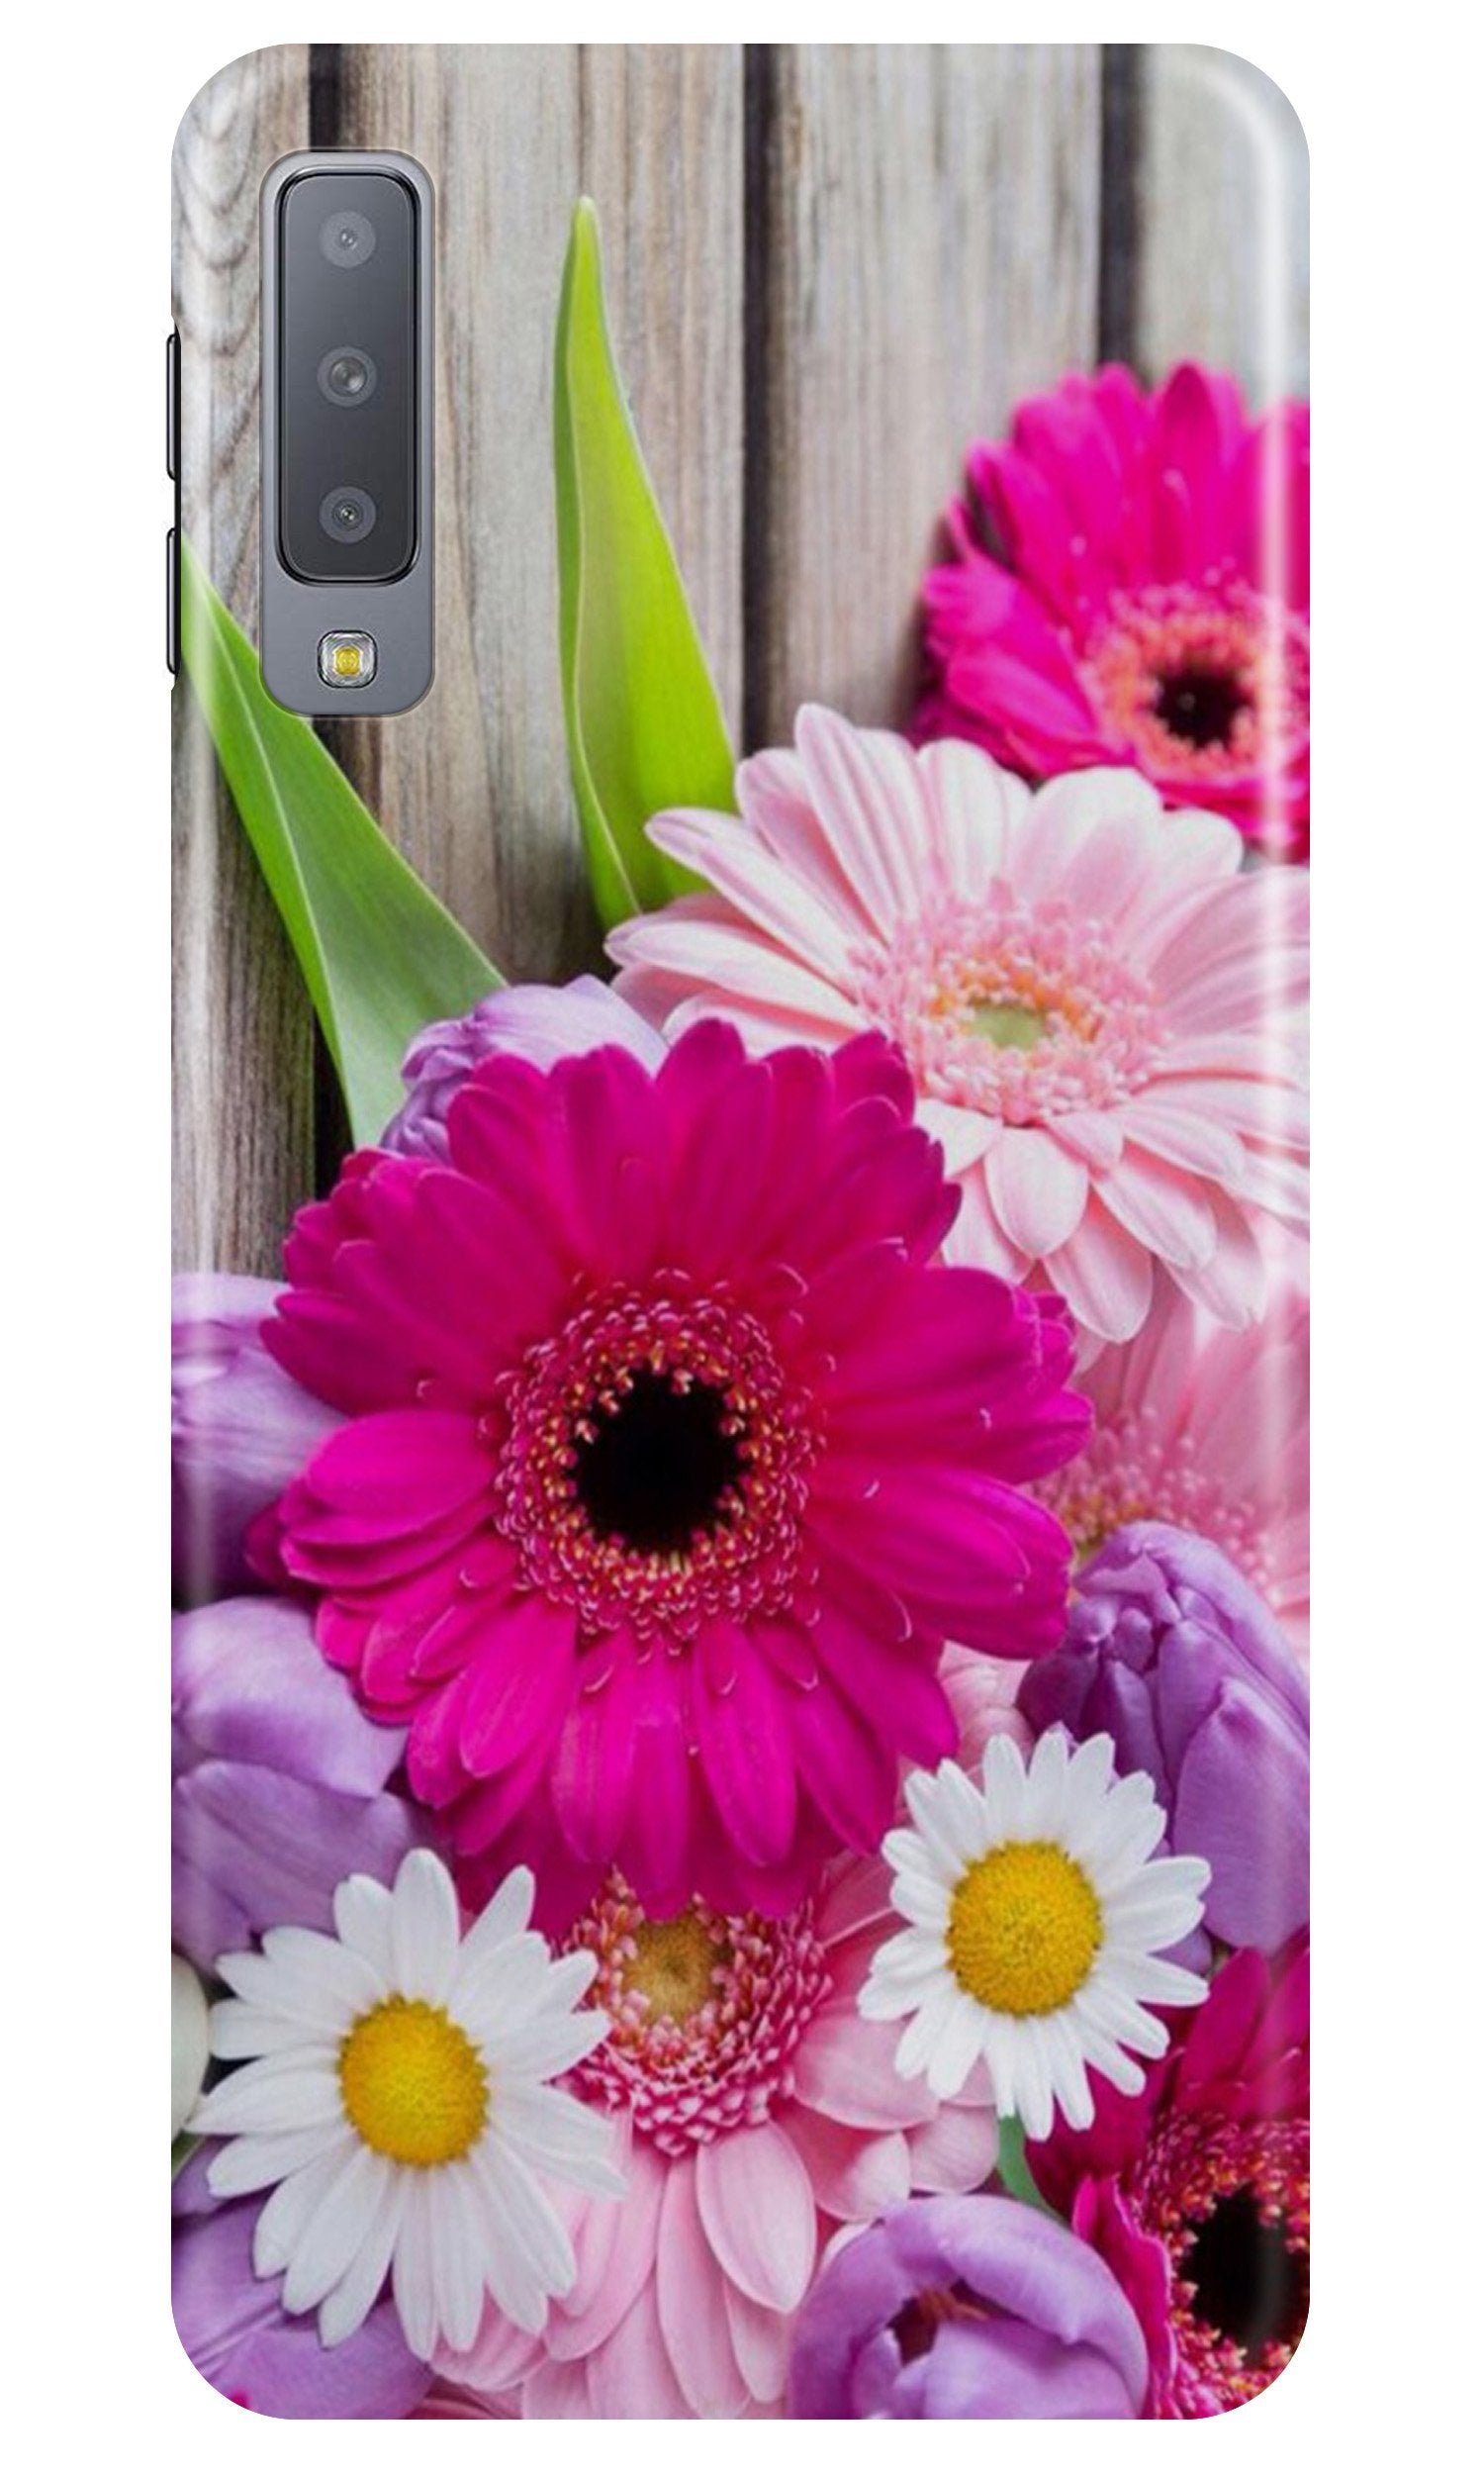 Coloful Daisy2 Case for Samsung Galaxy A50s